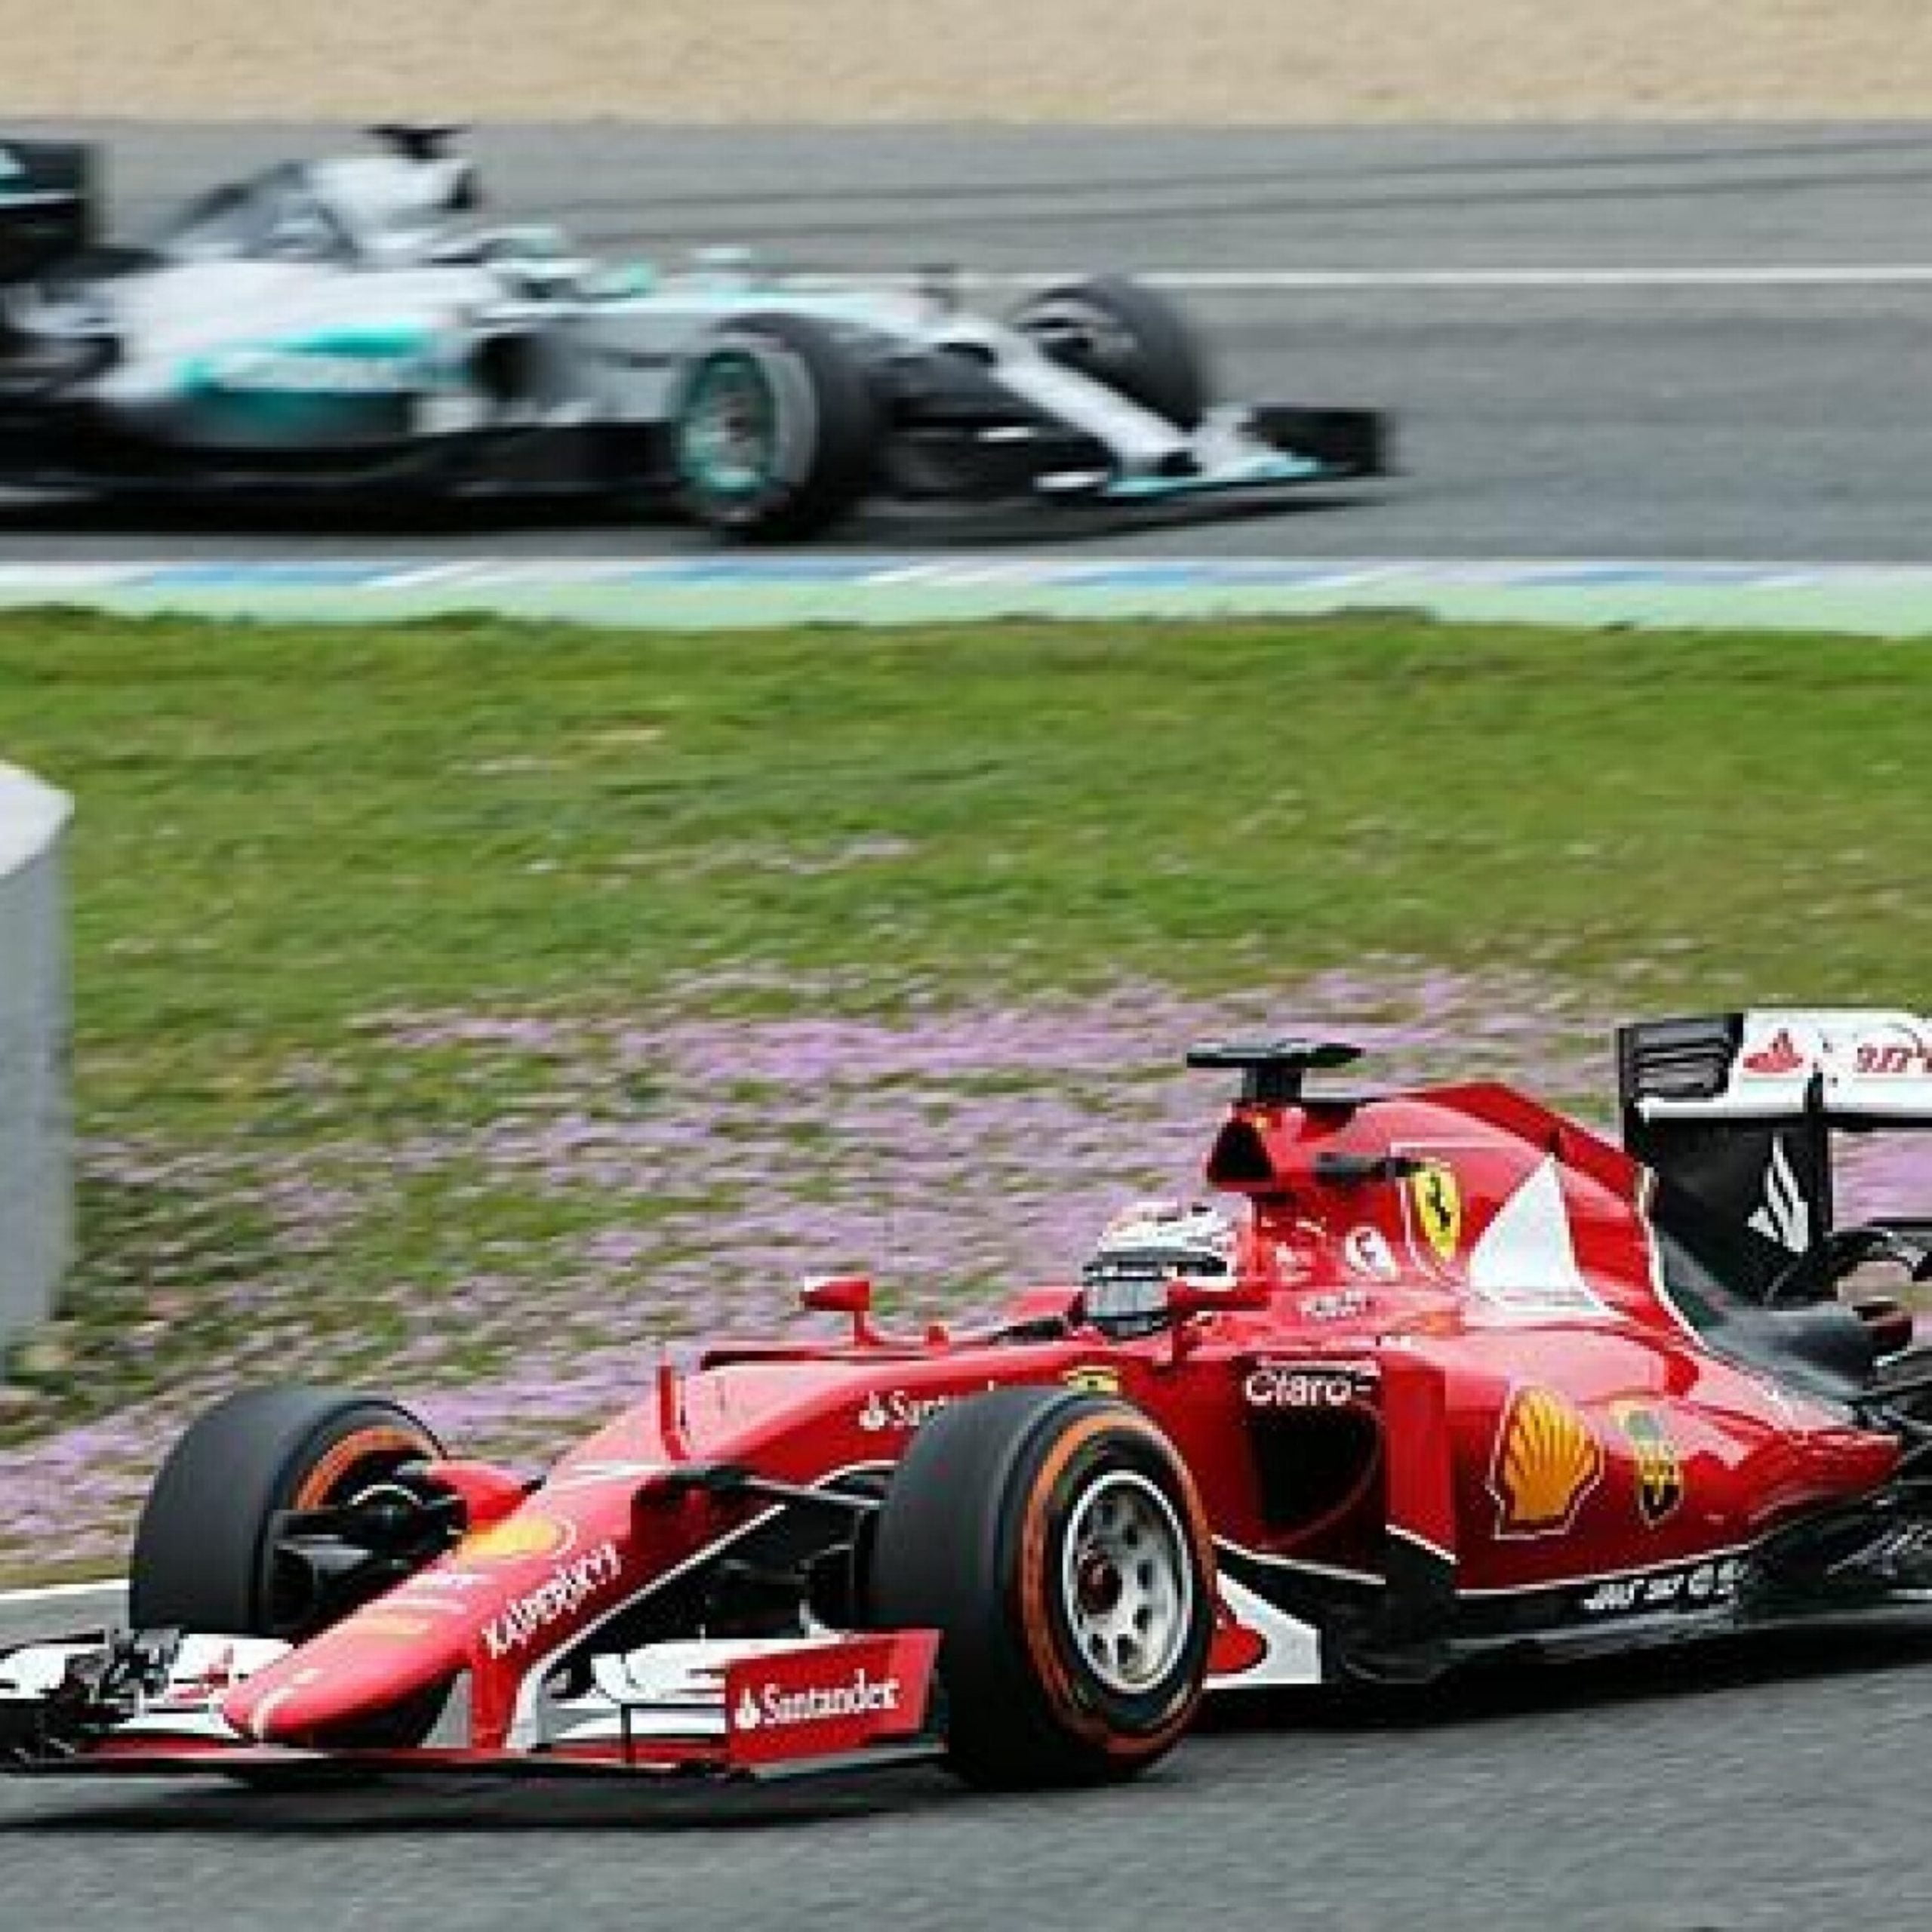 Ferrari vs. Mercedes, Really?